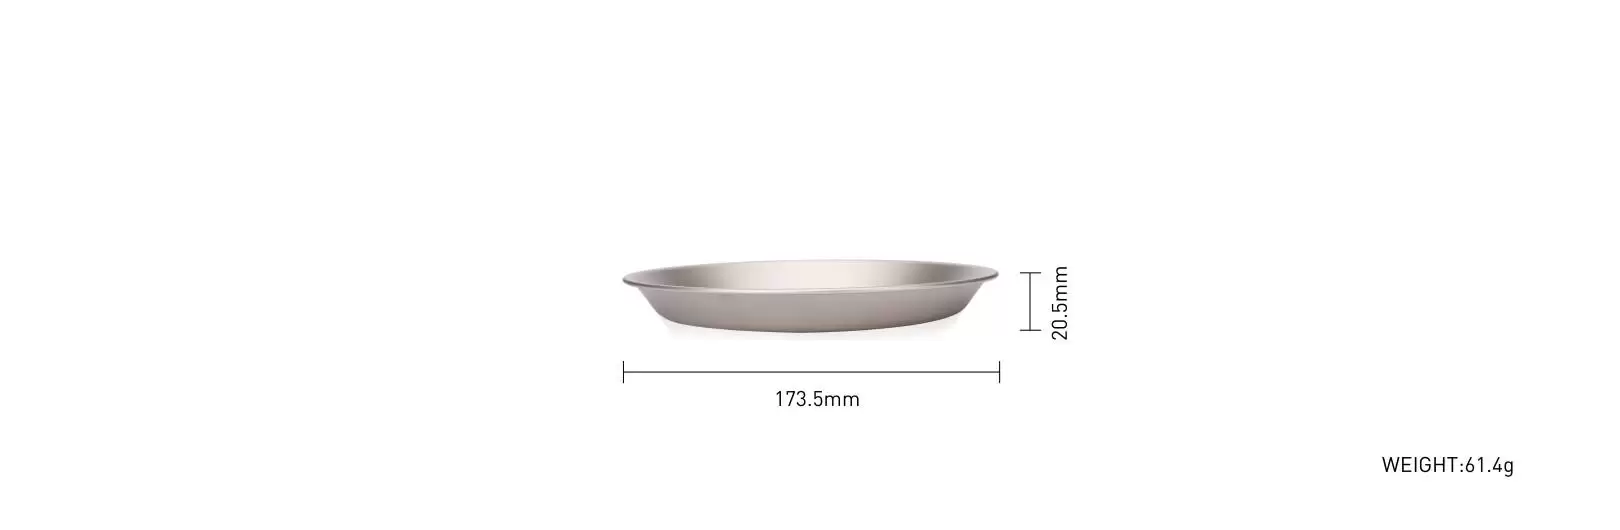 details of Ultralight Cystallation Titanium Camping Utensil Shallow Dish Cookware